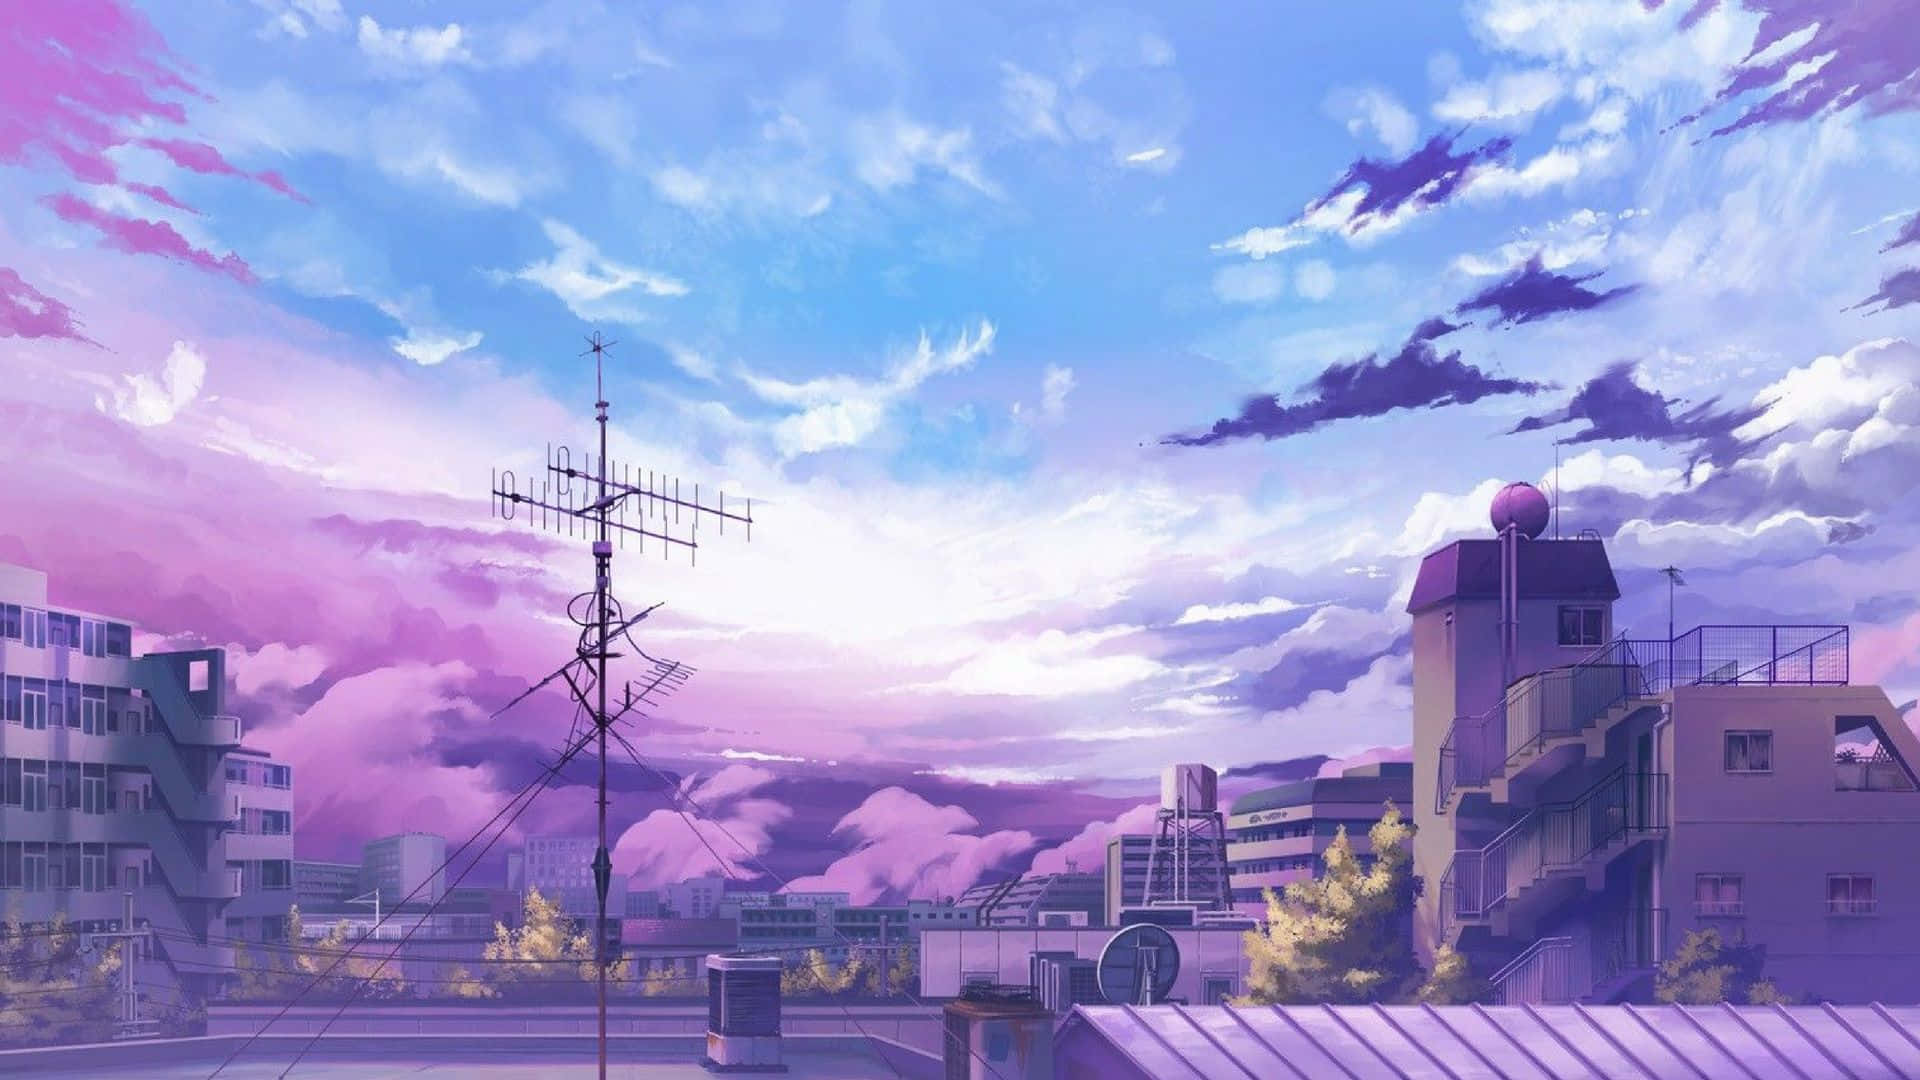 Anime Cityscape Images - Free Download on Freepik